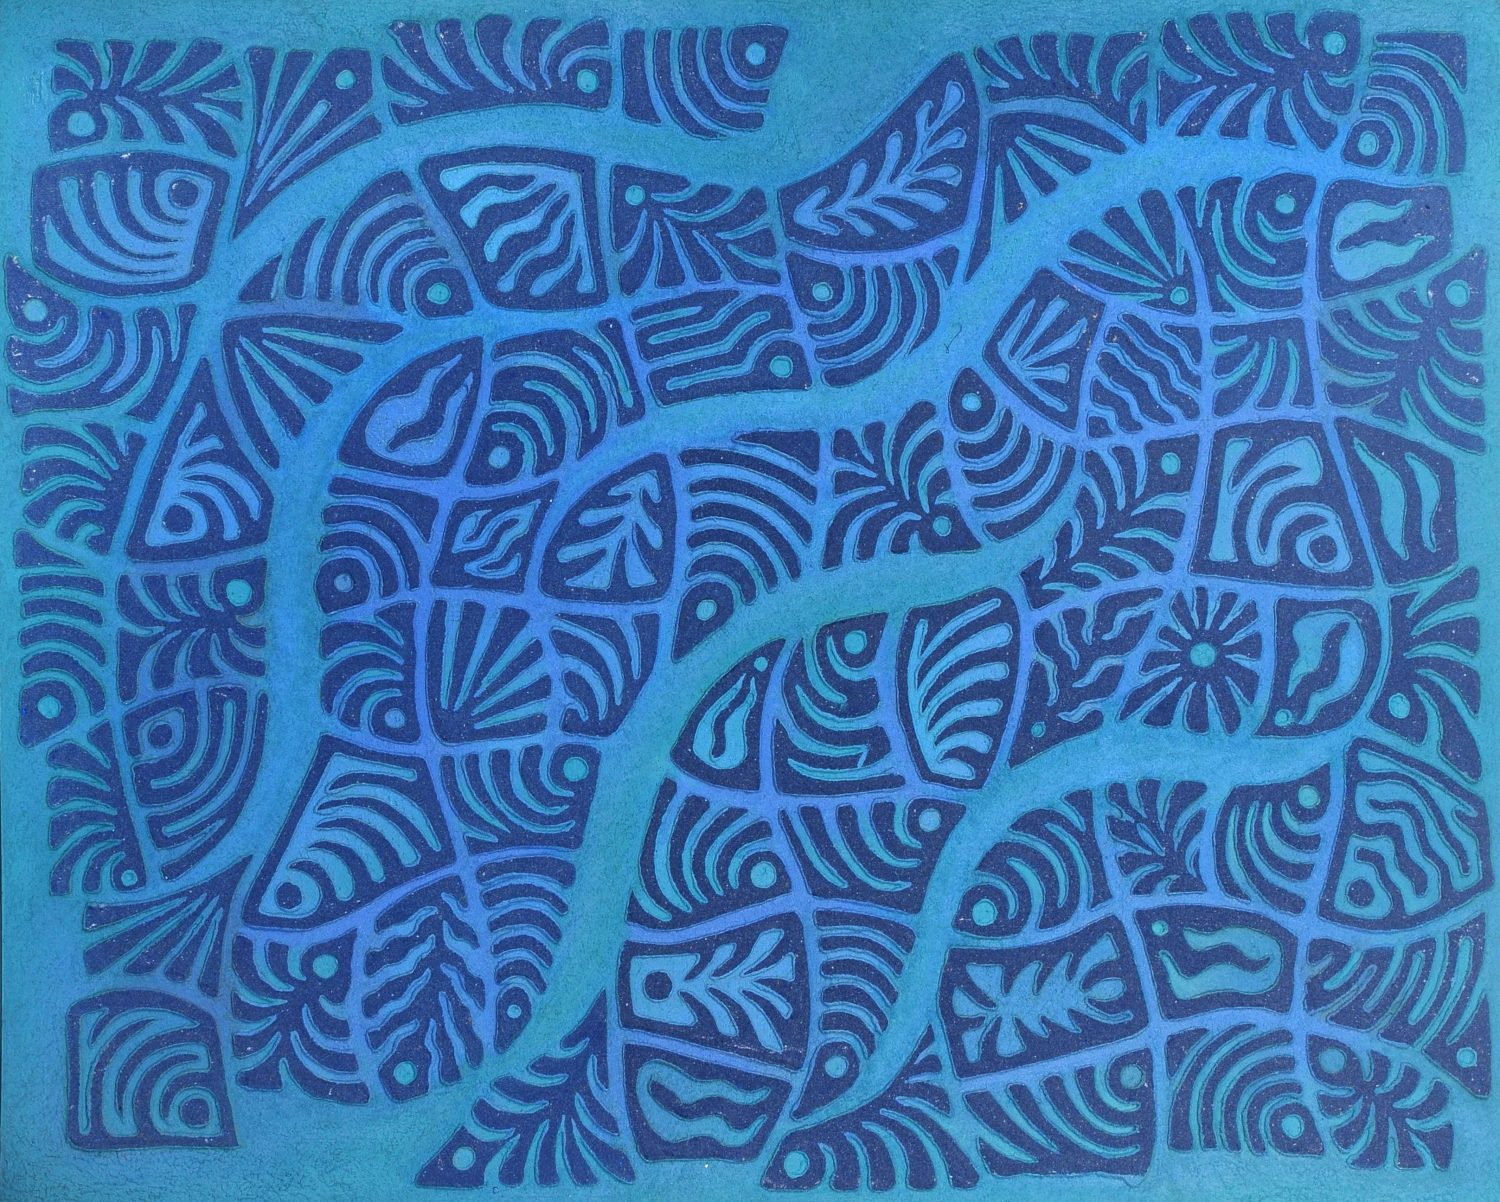 thumbnail of Vegetable sea by Ecuadorian artist MÃ³nica Sarmiento. medium: mixed media on wood. Dimensions: 31.5 x 39 inches. date: 2003